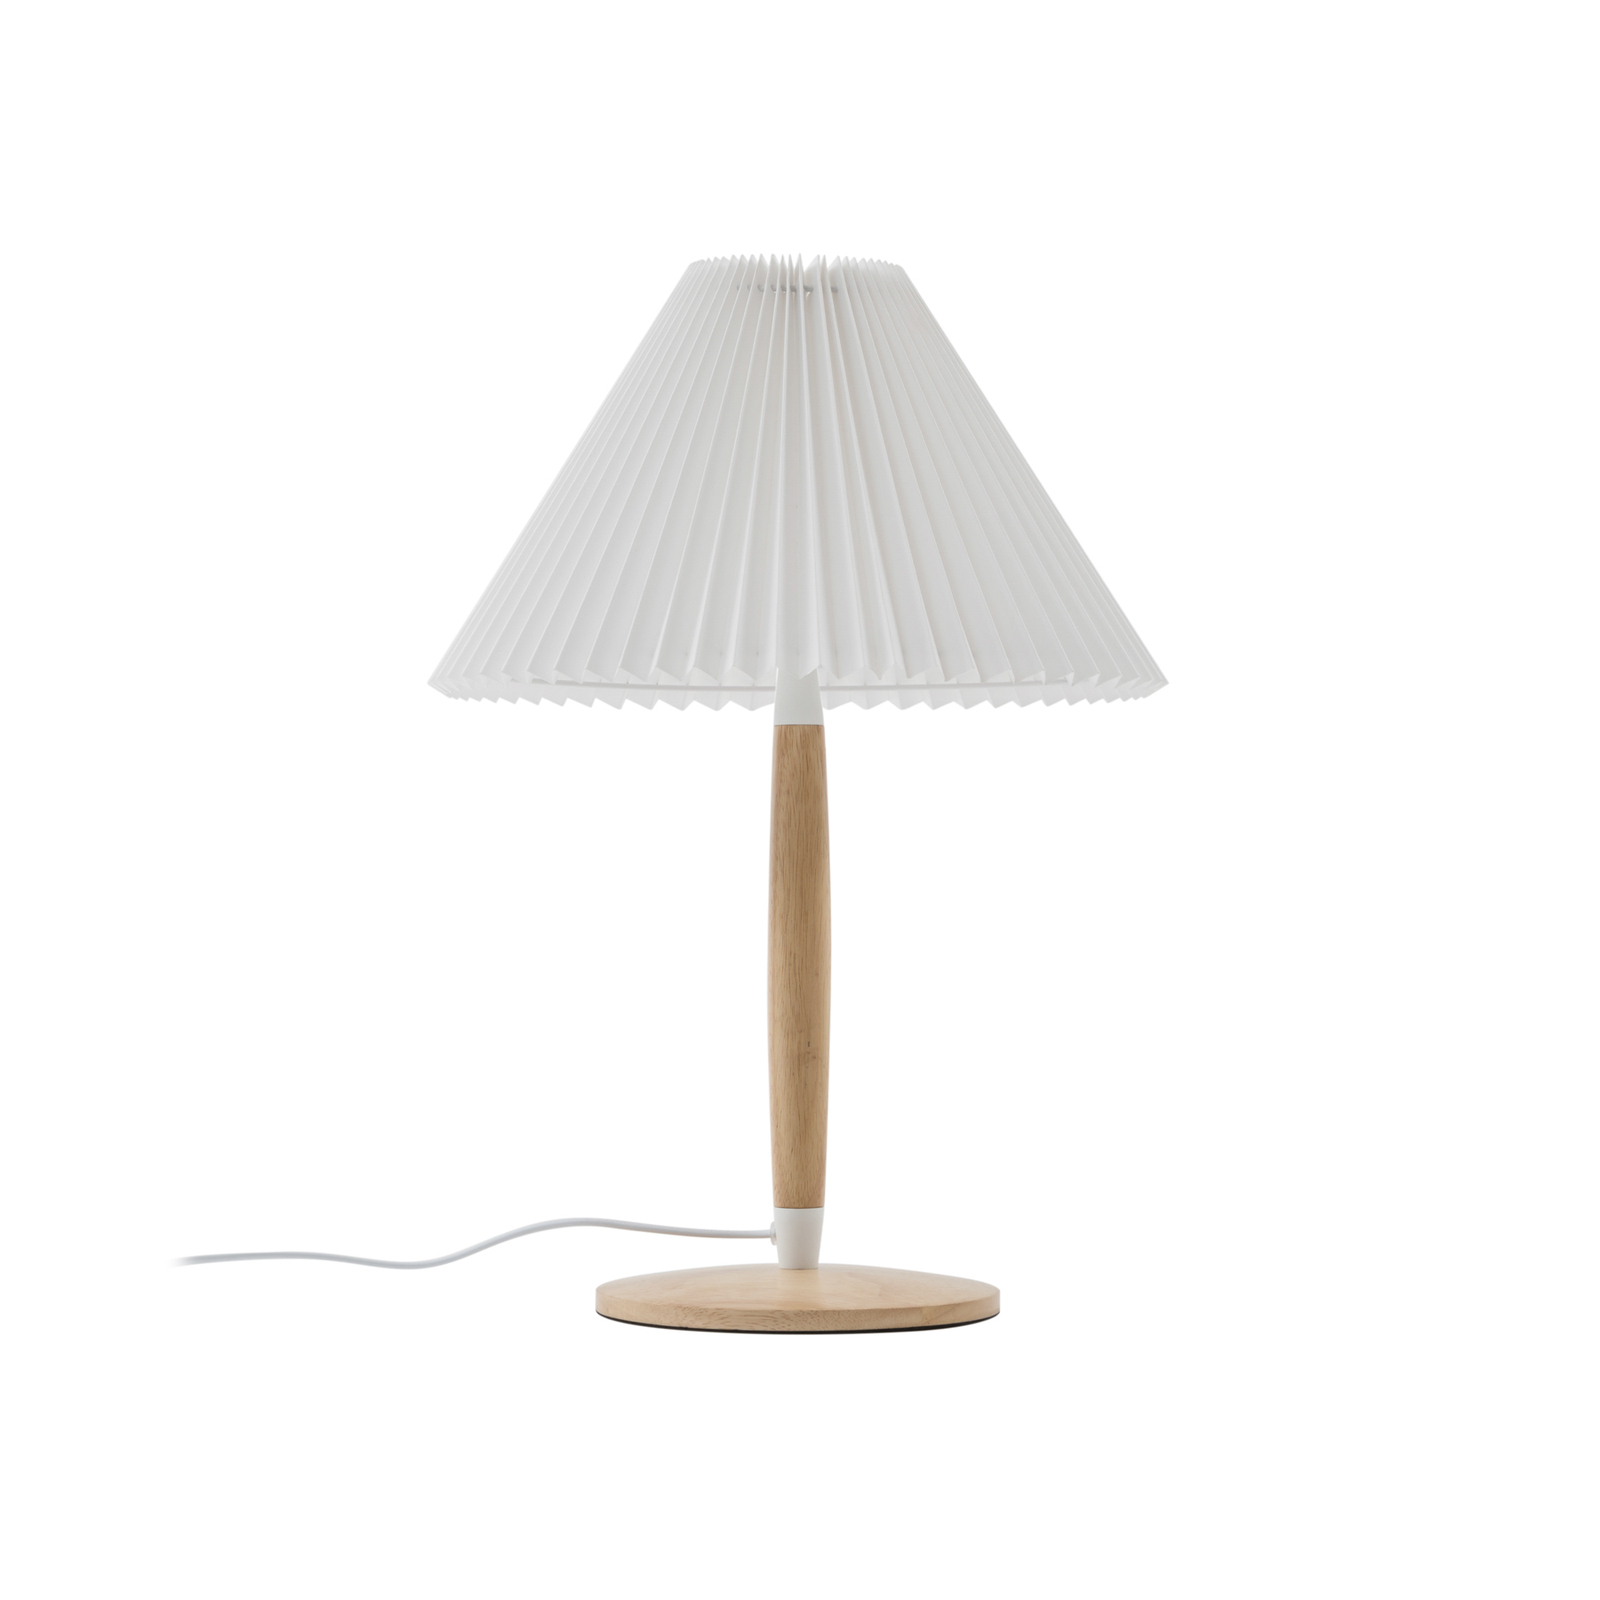 Lucande Ellorin tafellamp, wit, hout, Ø 37 cm, E27